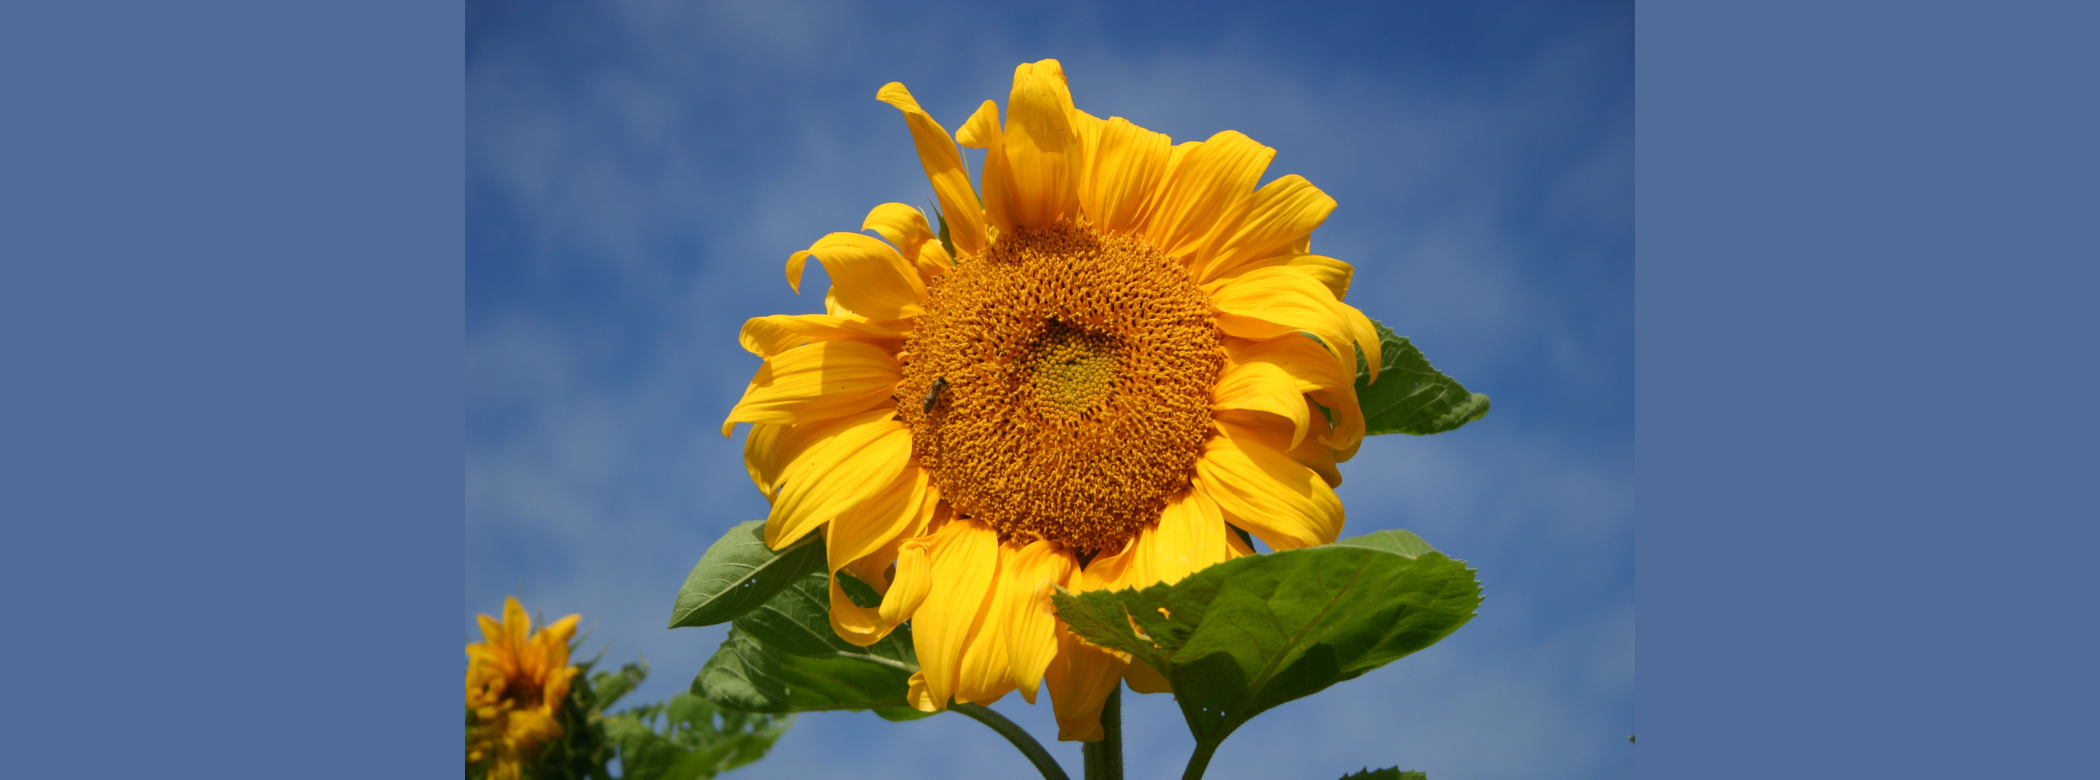 A yellow sunflower head against a blue sky.